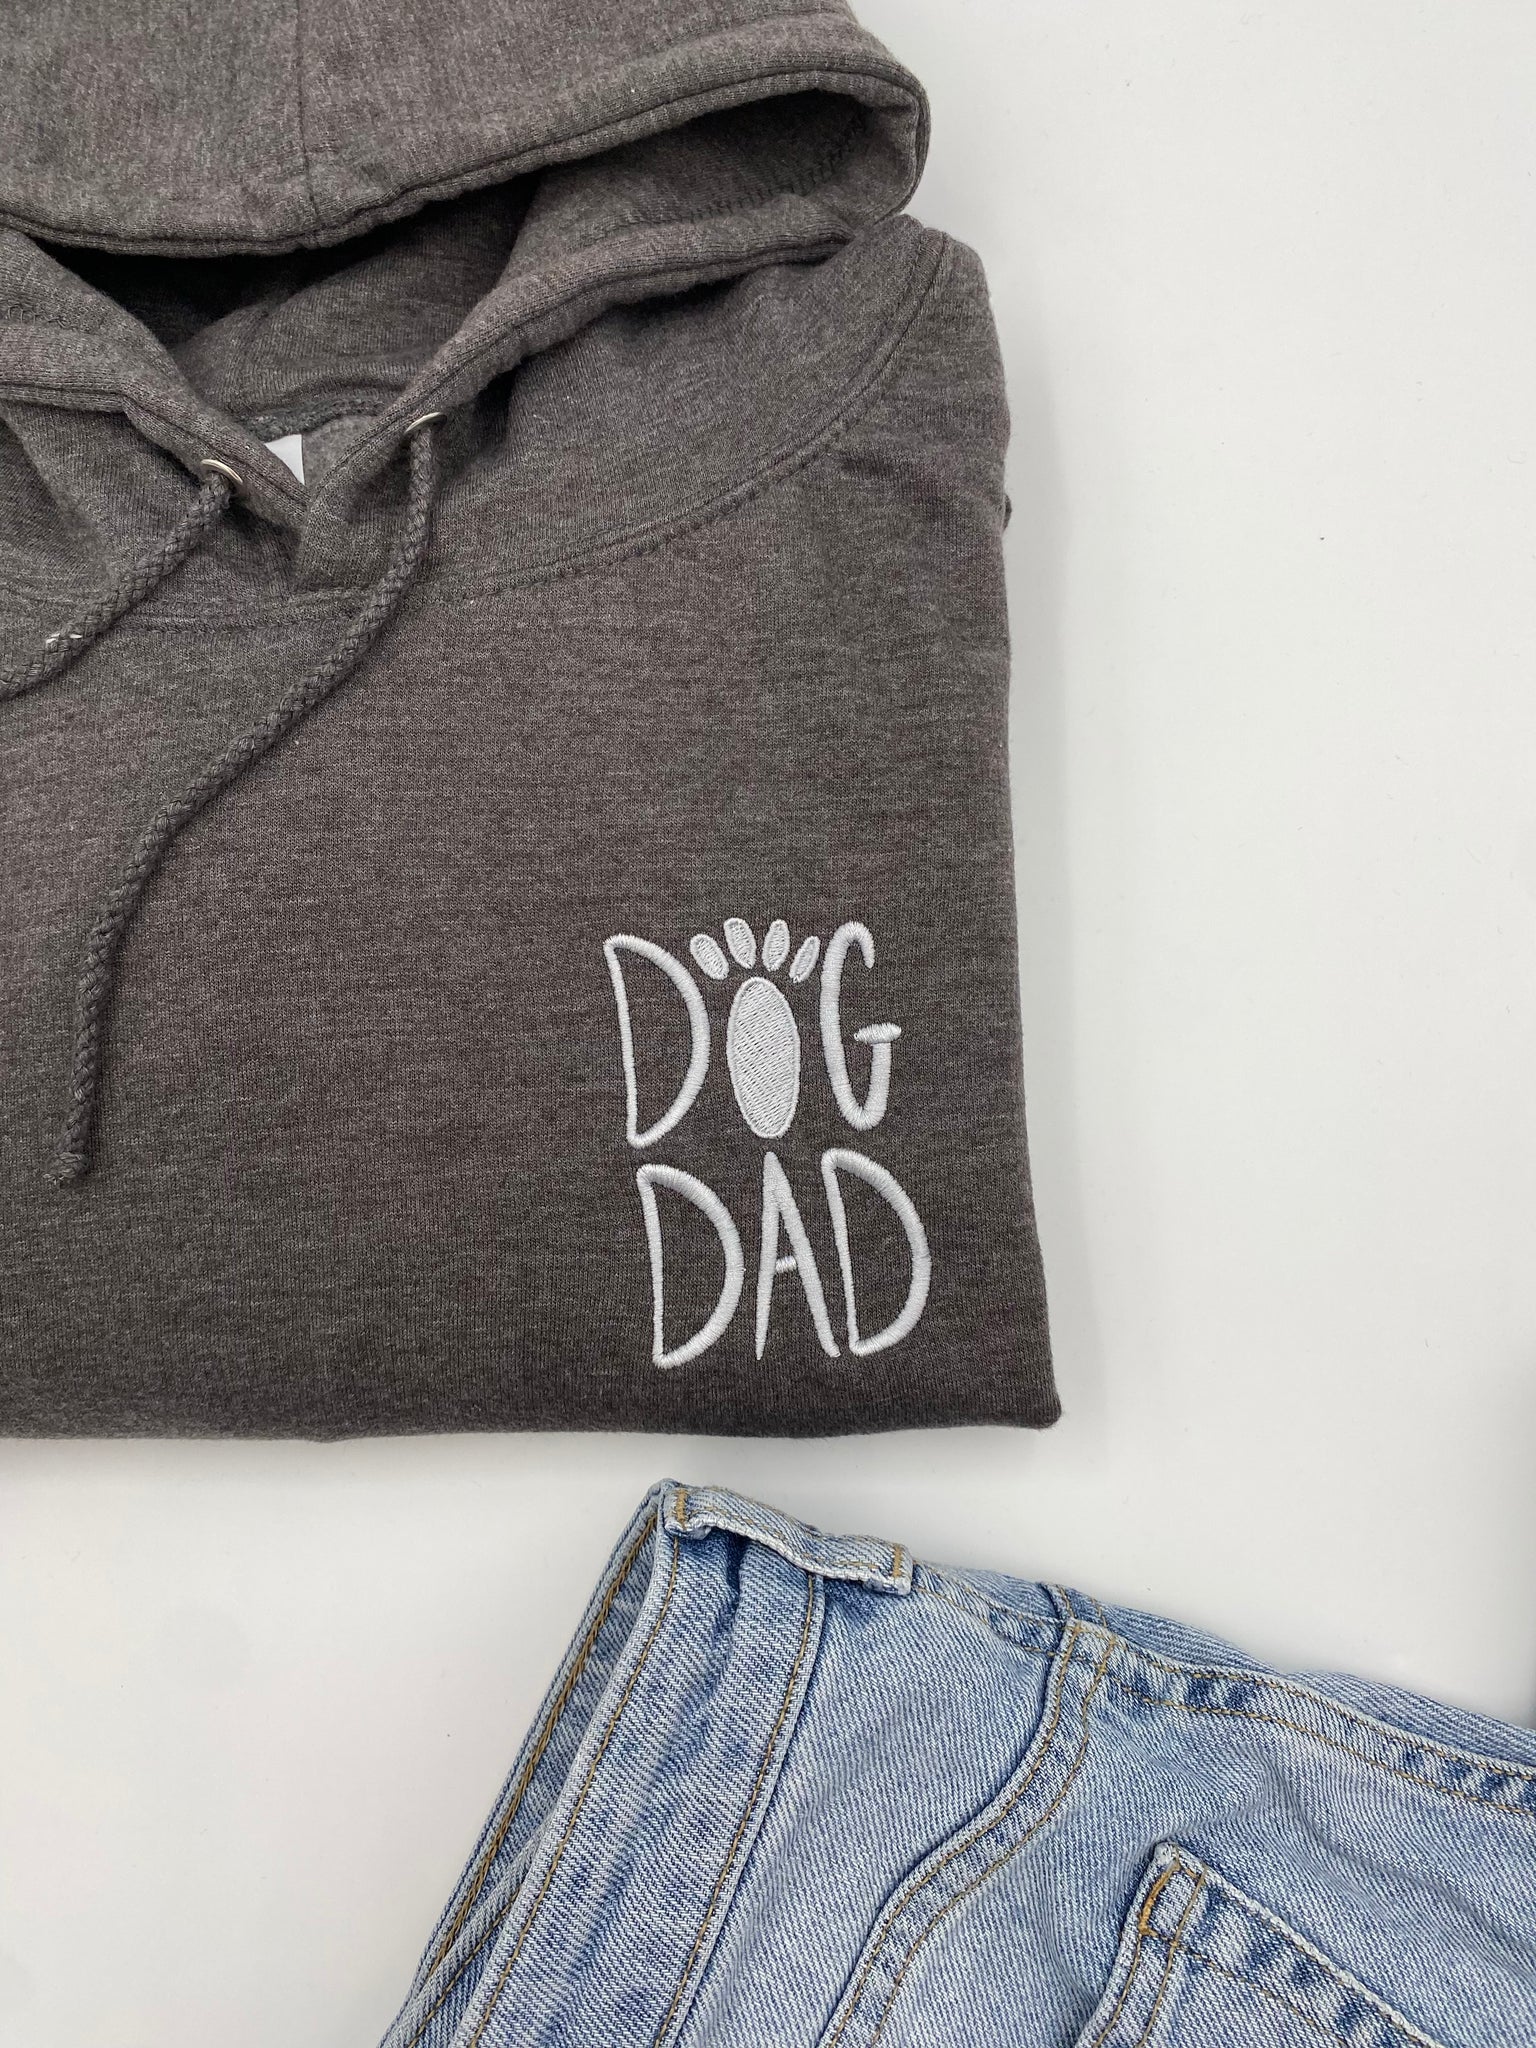 Dog Dad with Paw Sweatshirt or Hoodie